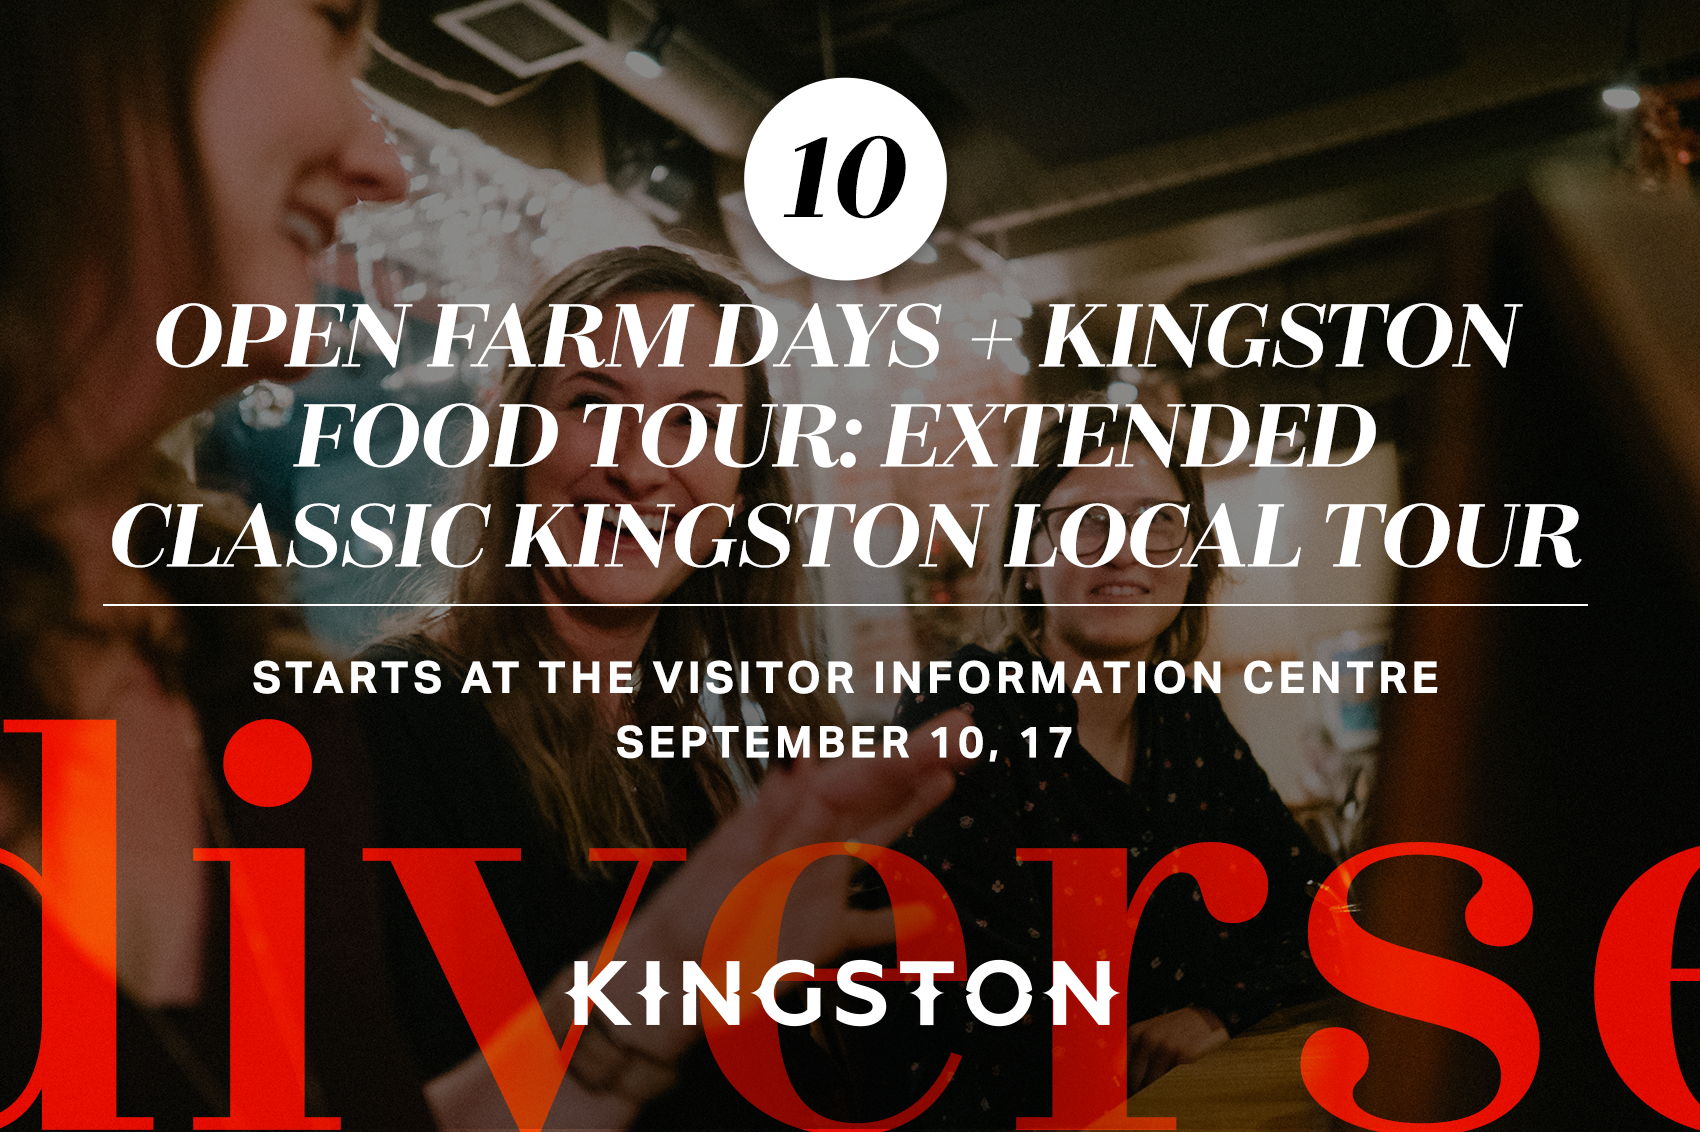 Open Farm Days + Kingston Food Tours: Extended Classic Kingston Local Tour